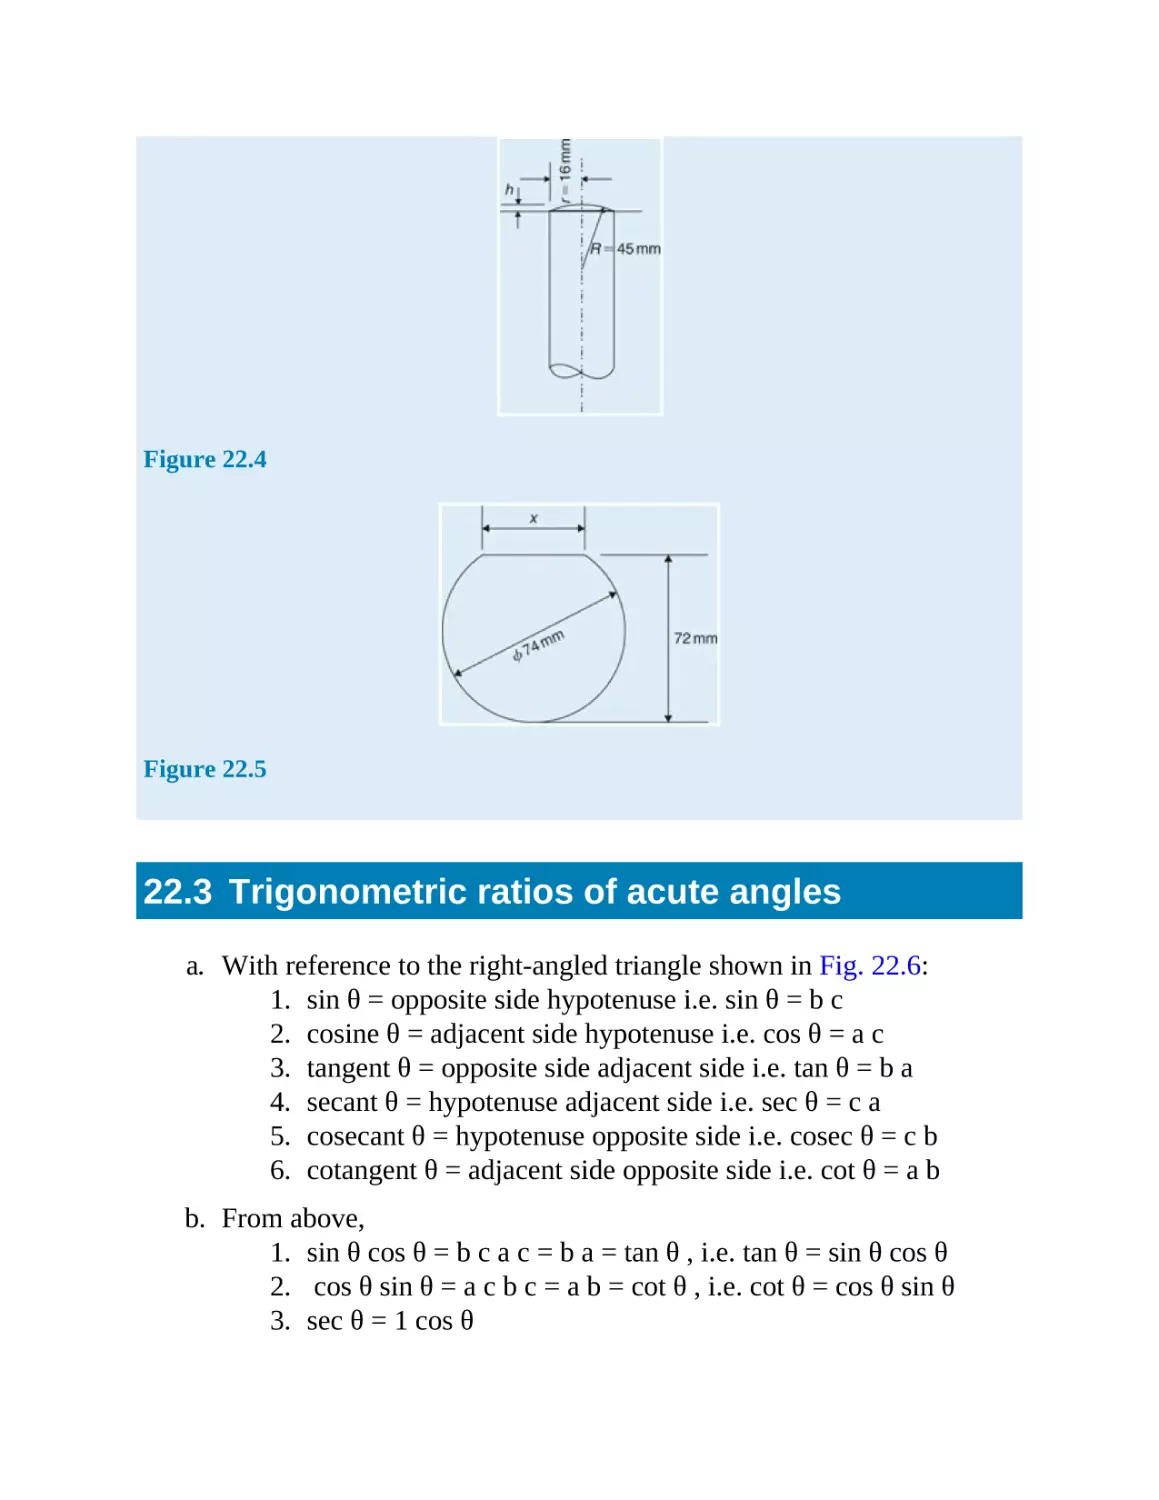 22.3 Trigonometric ratios of acute angles